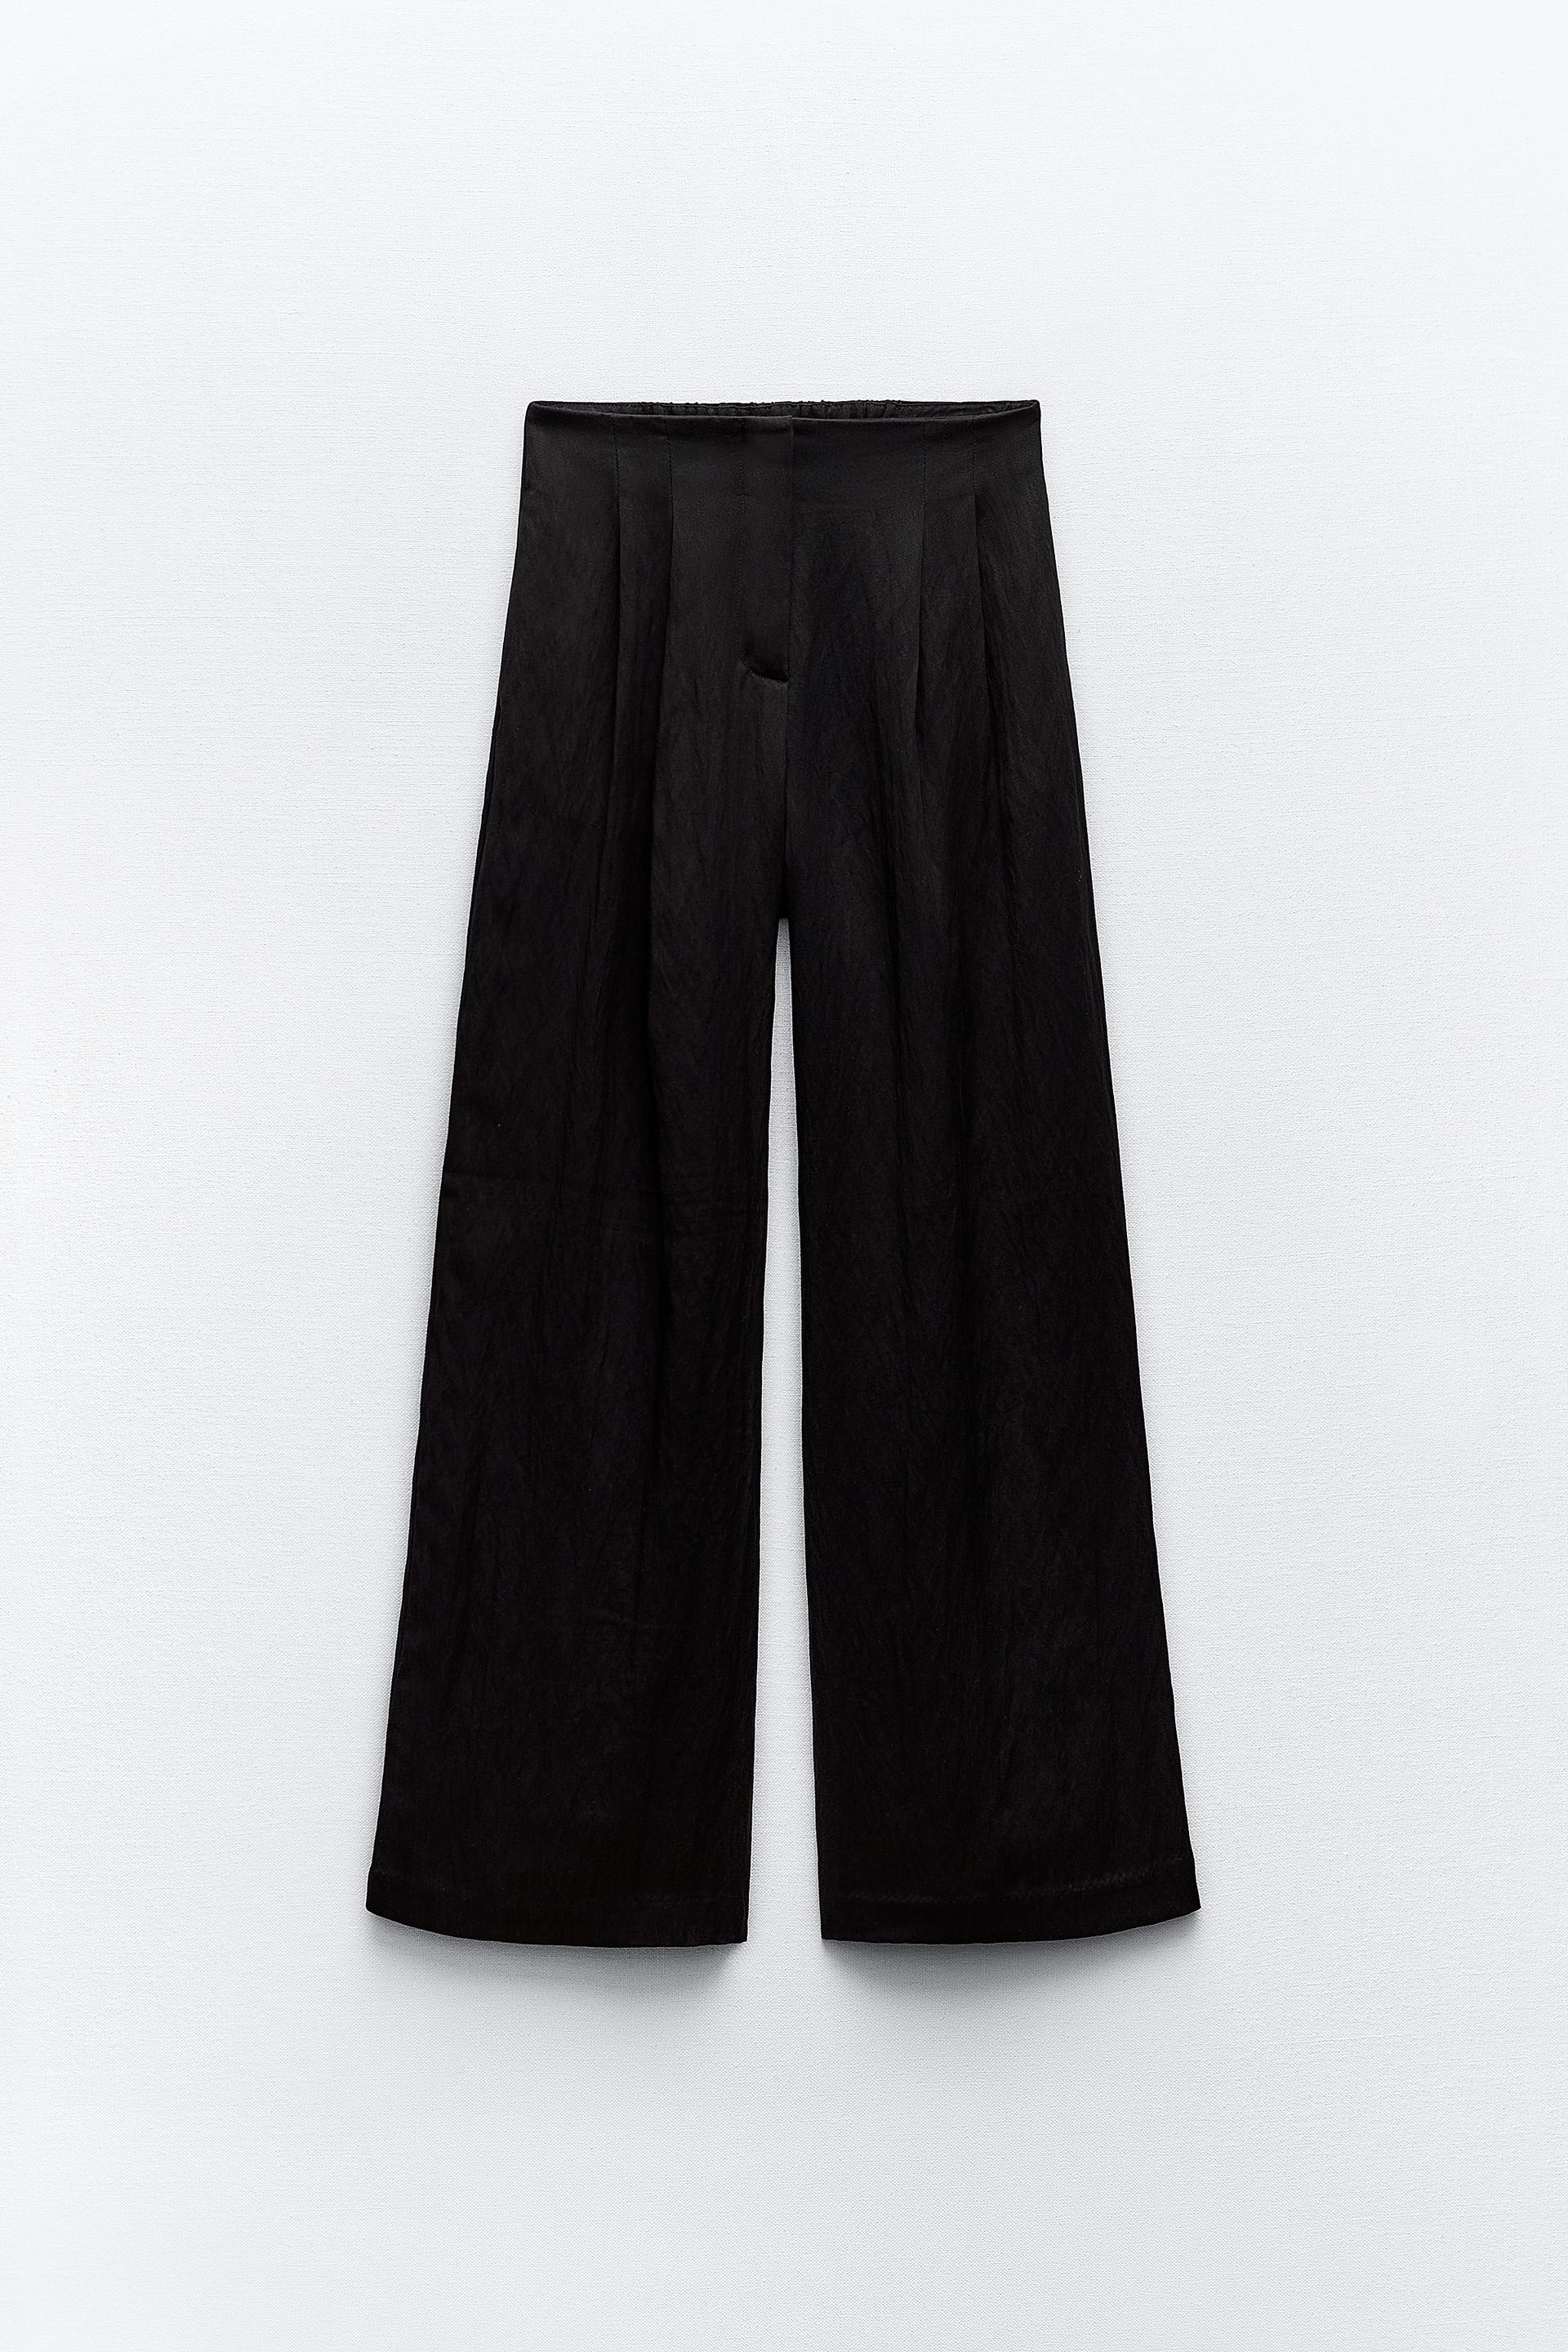 Zara Women Finely pleated palazzo trousers 9479/277/800 (X-Large